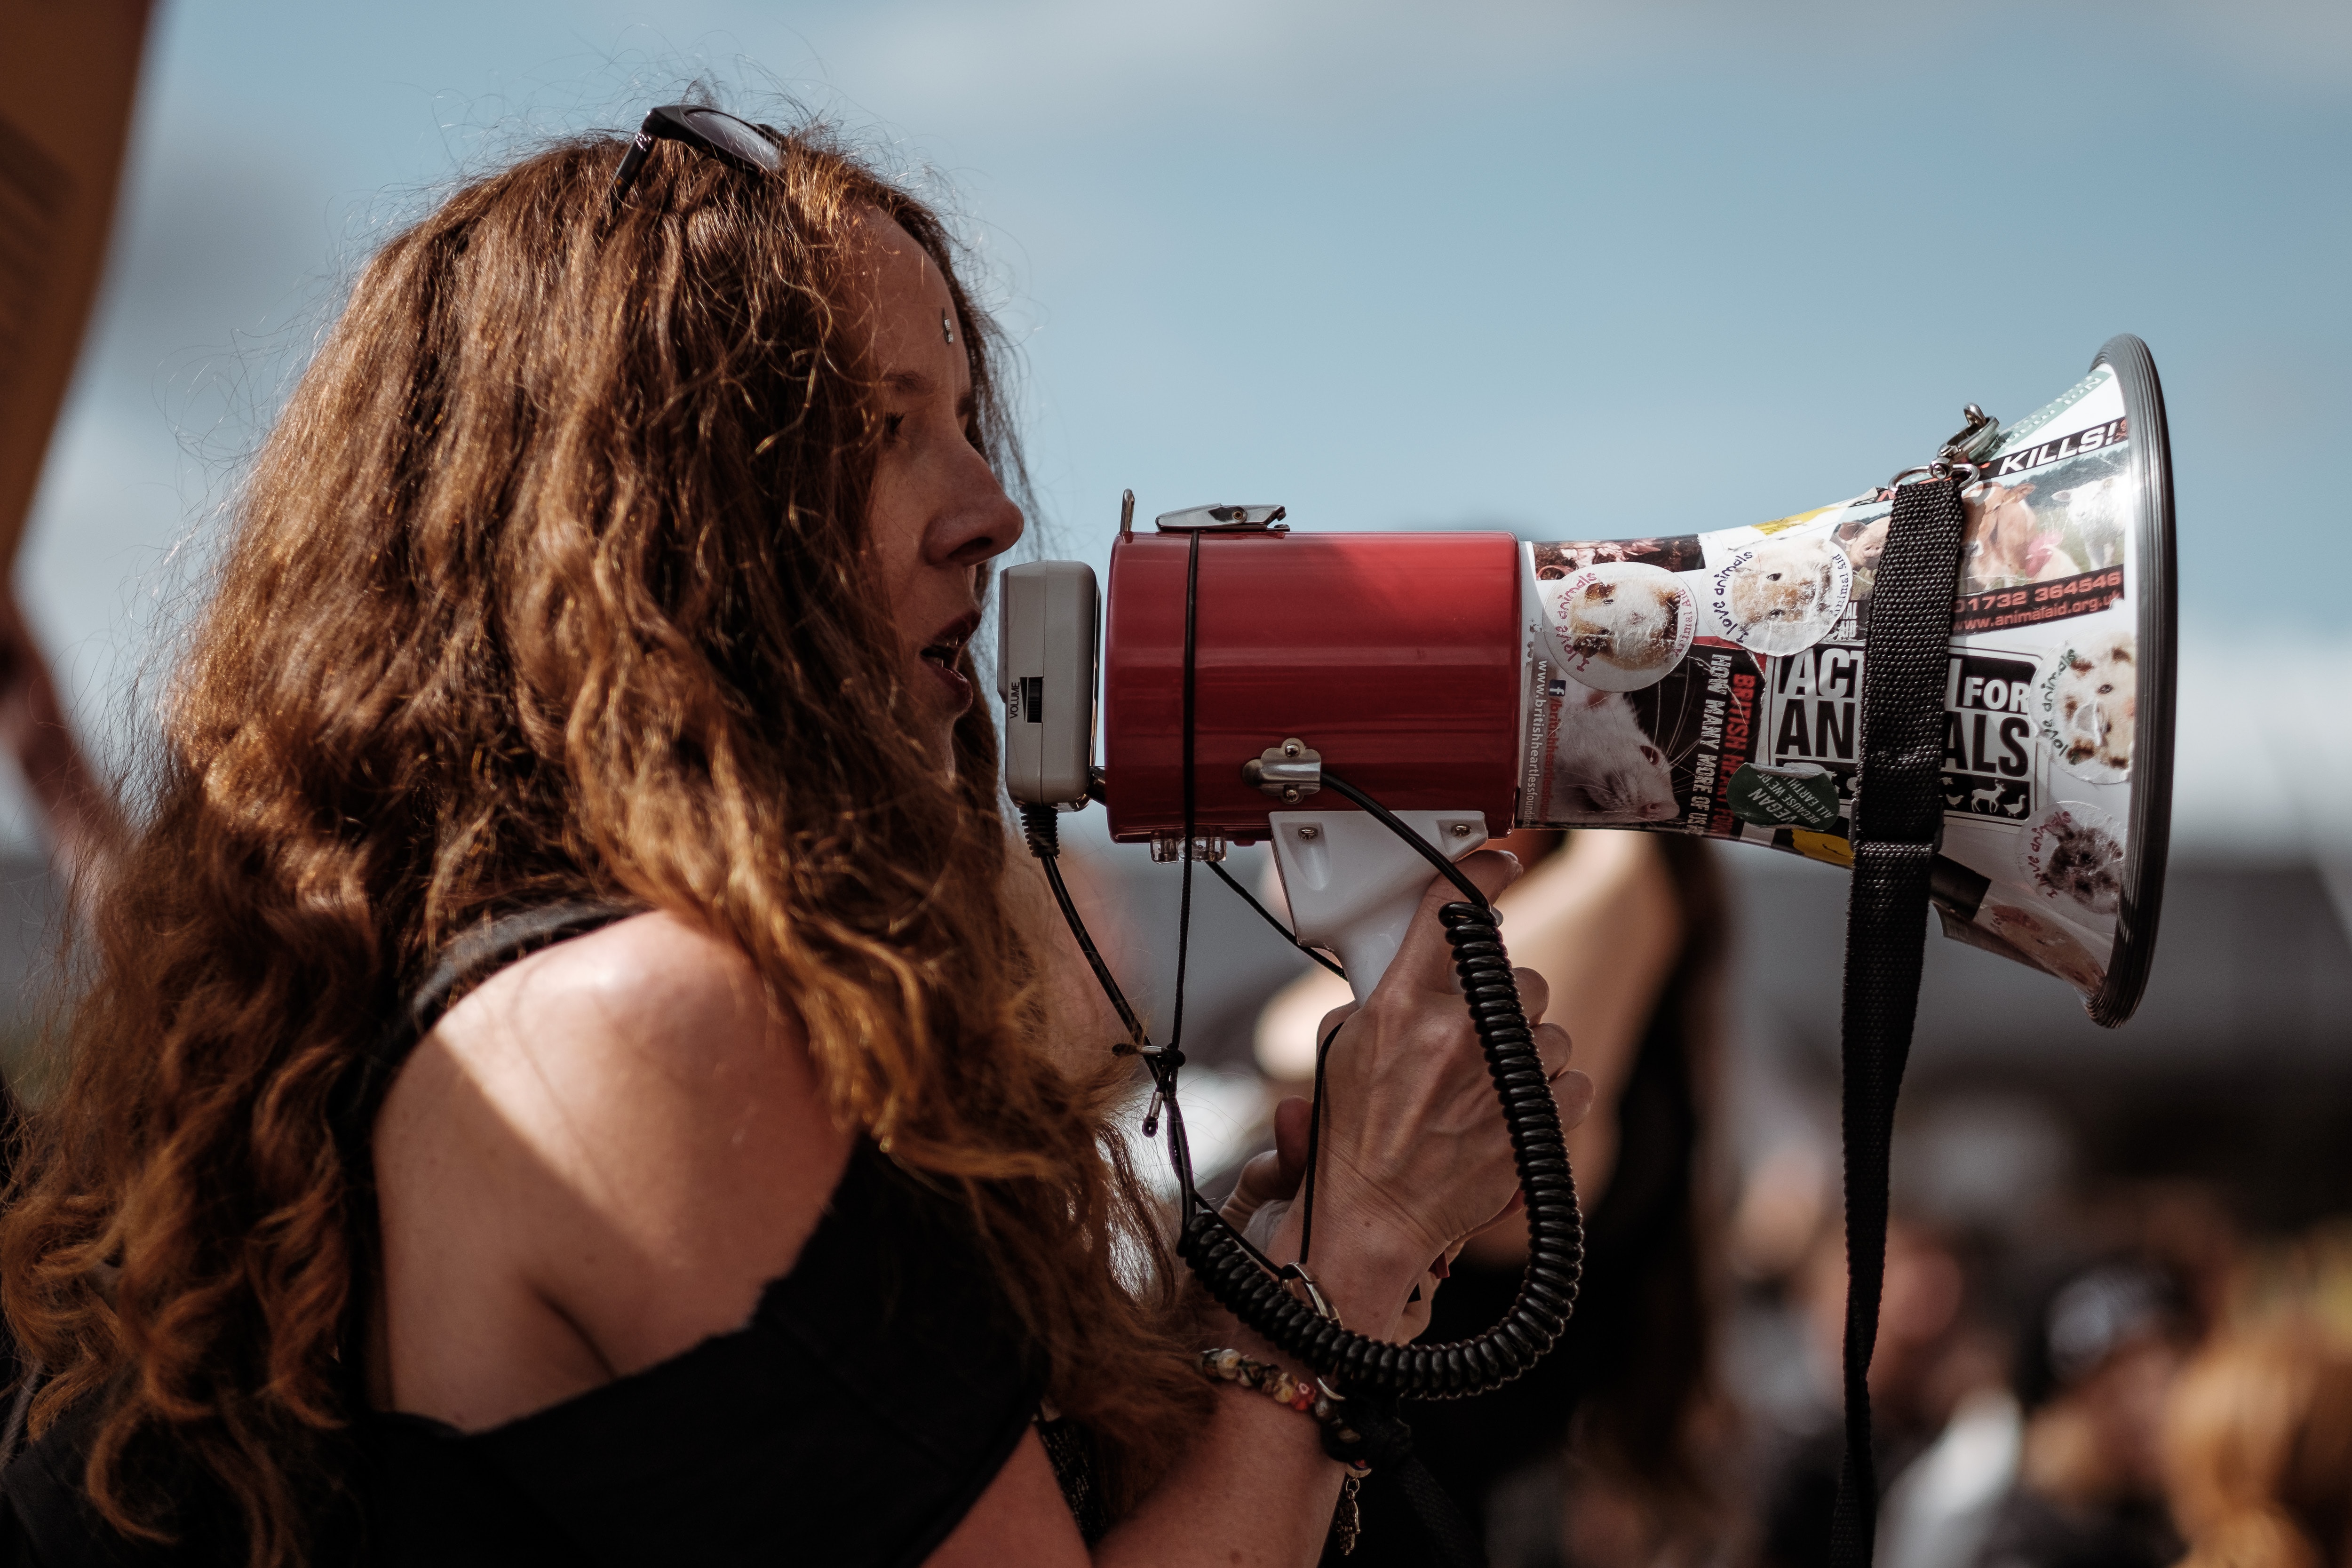 A woman speaking through a megaphone. | Source: Unsplash